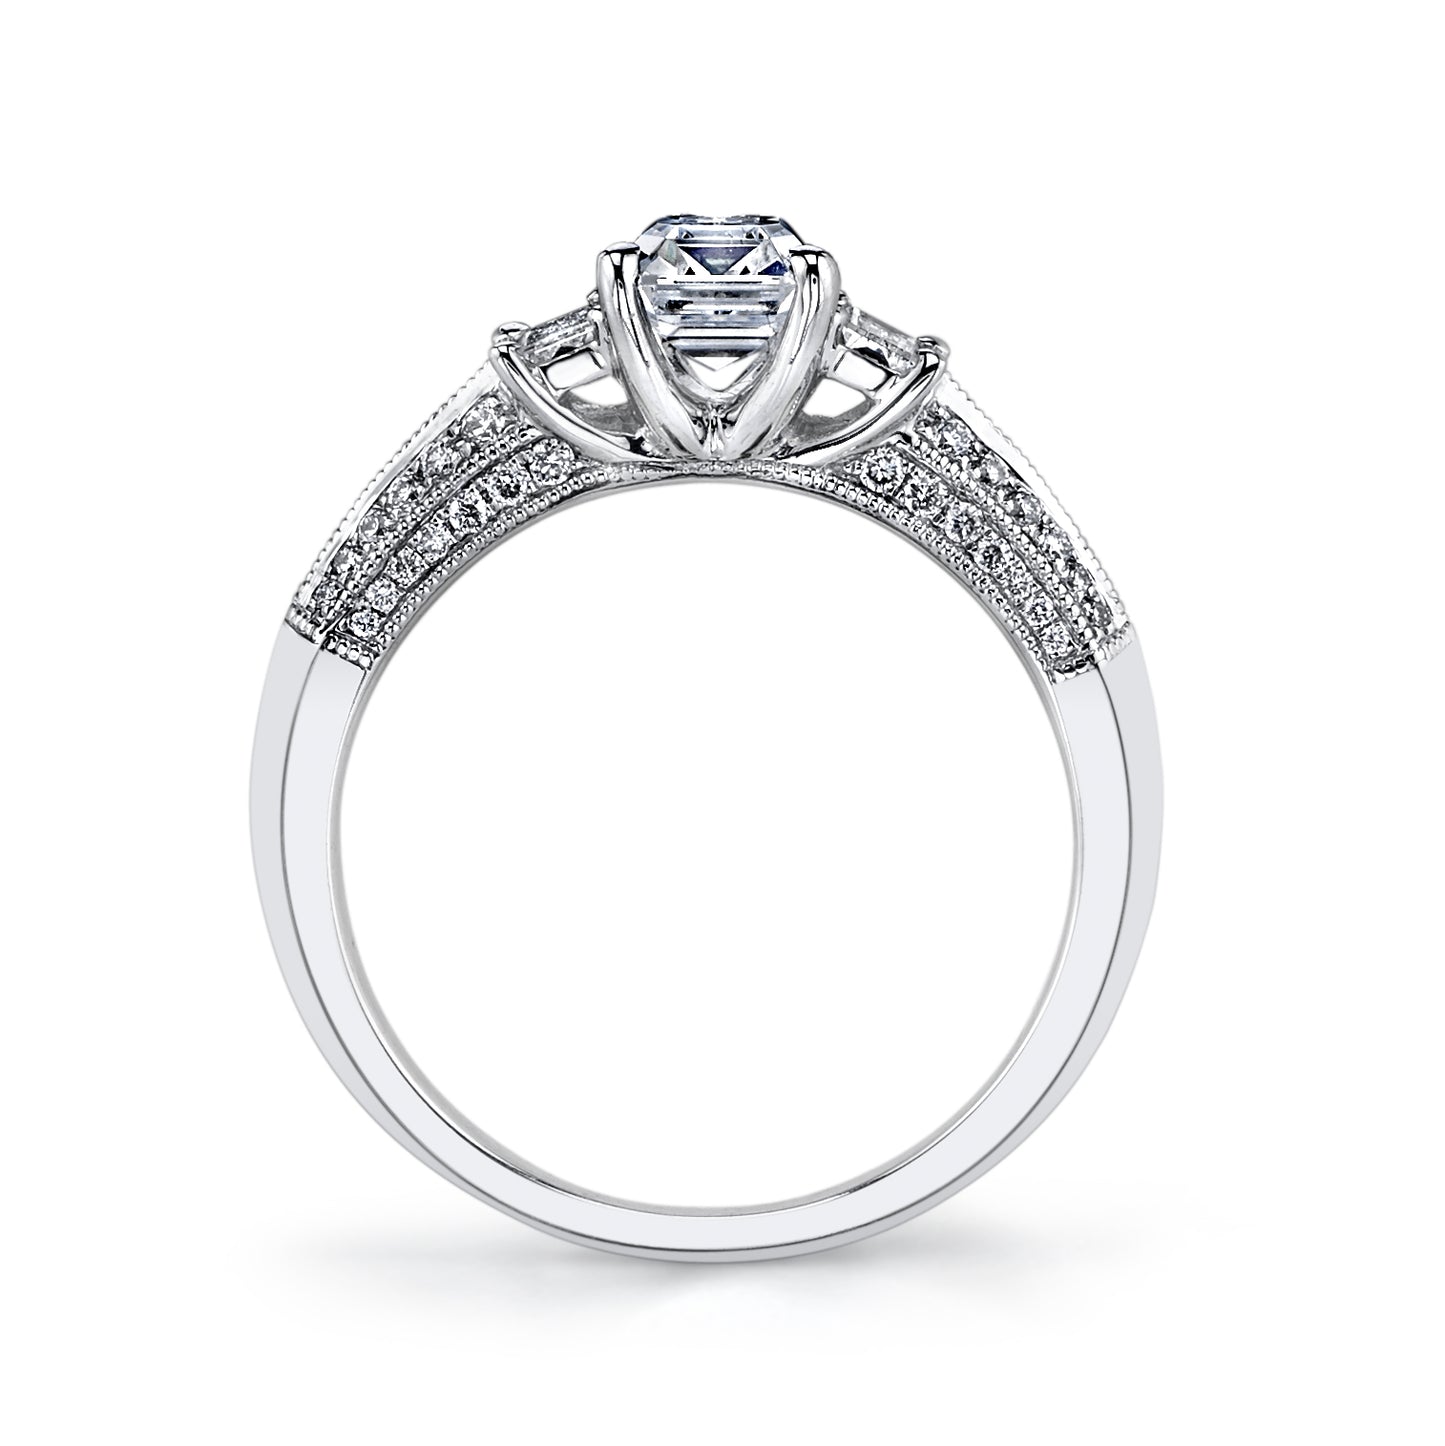 Diamond 3 Stone Emerald Cut Engagement Ring Mounting